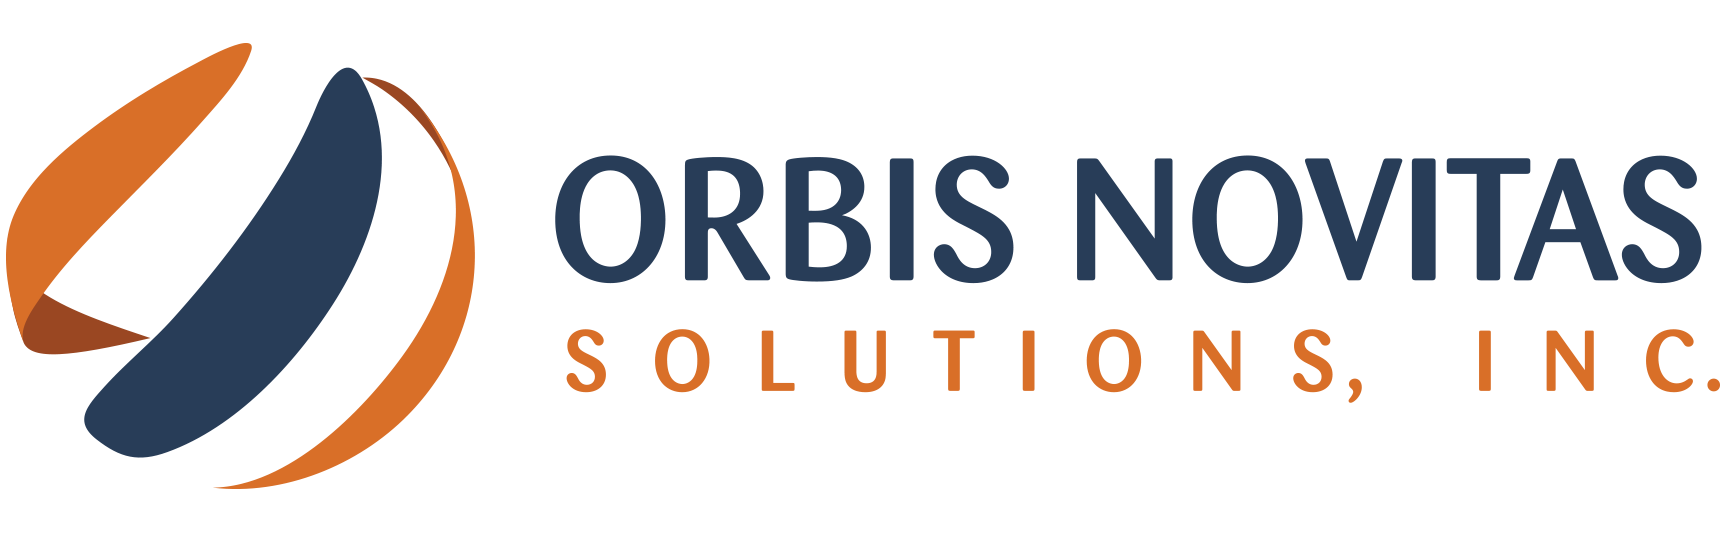 Orbis Novitas Solutions, Inc.